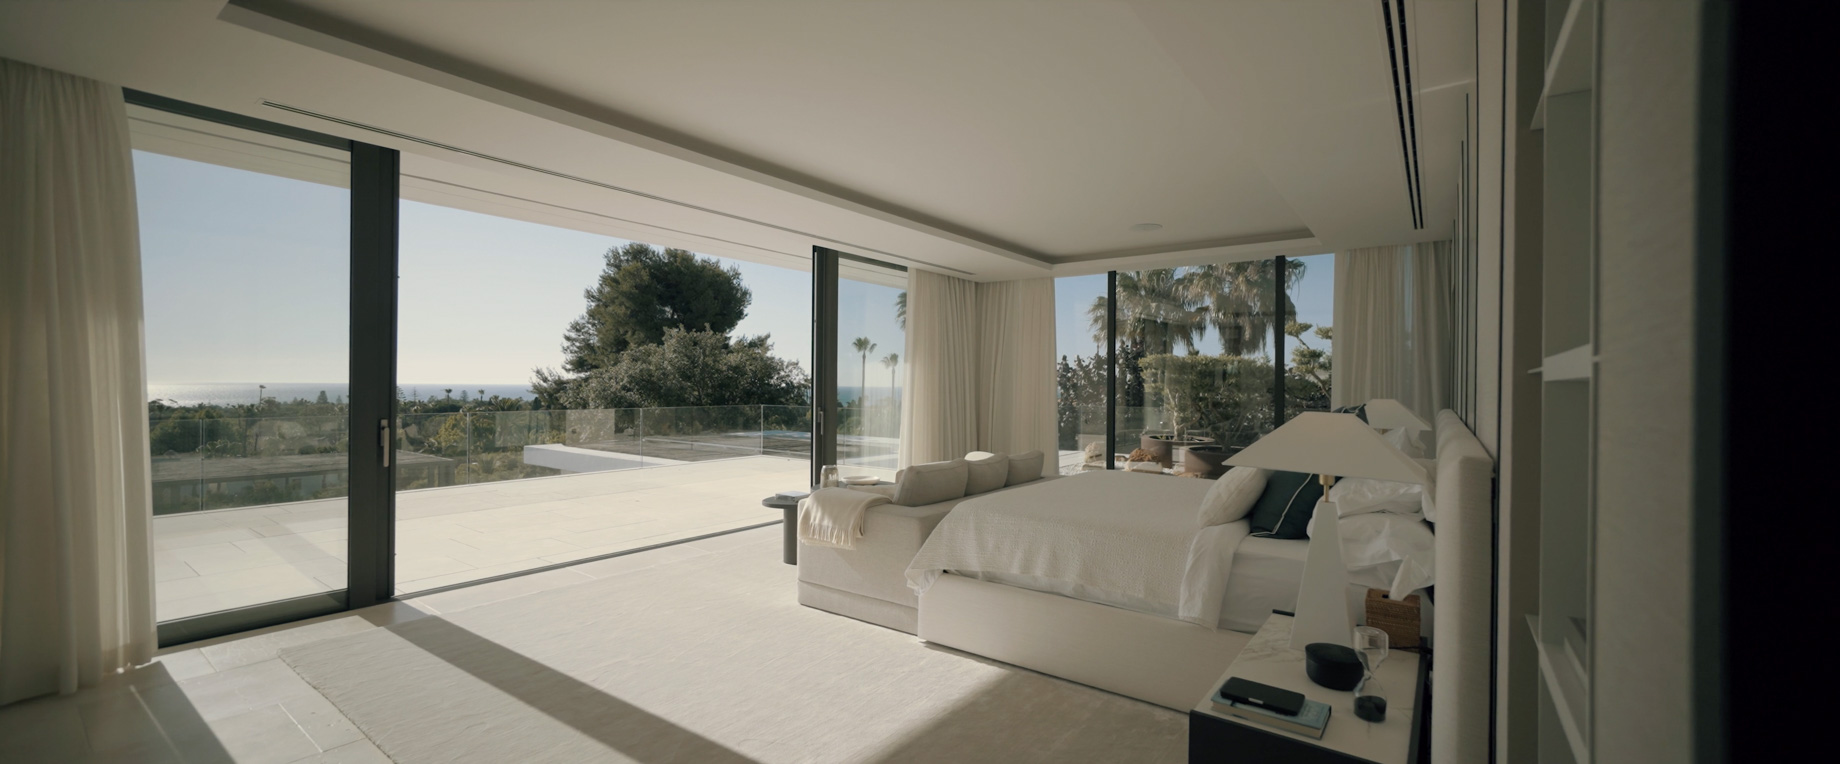 Villa The Hill Modern Contemporary Residence – Sotogrande Bajo, Andalusia, Spain – 32